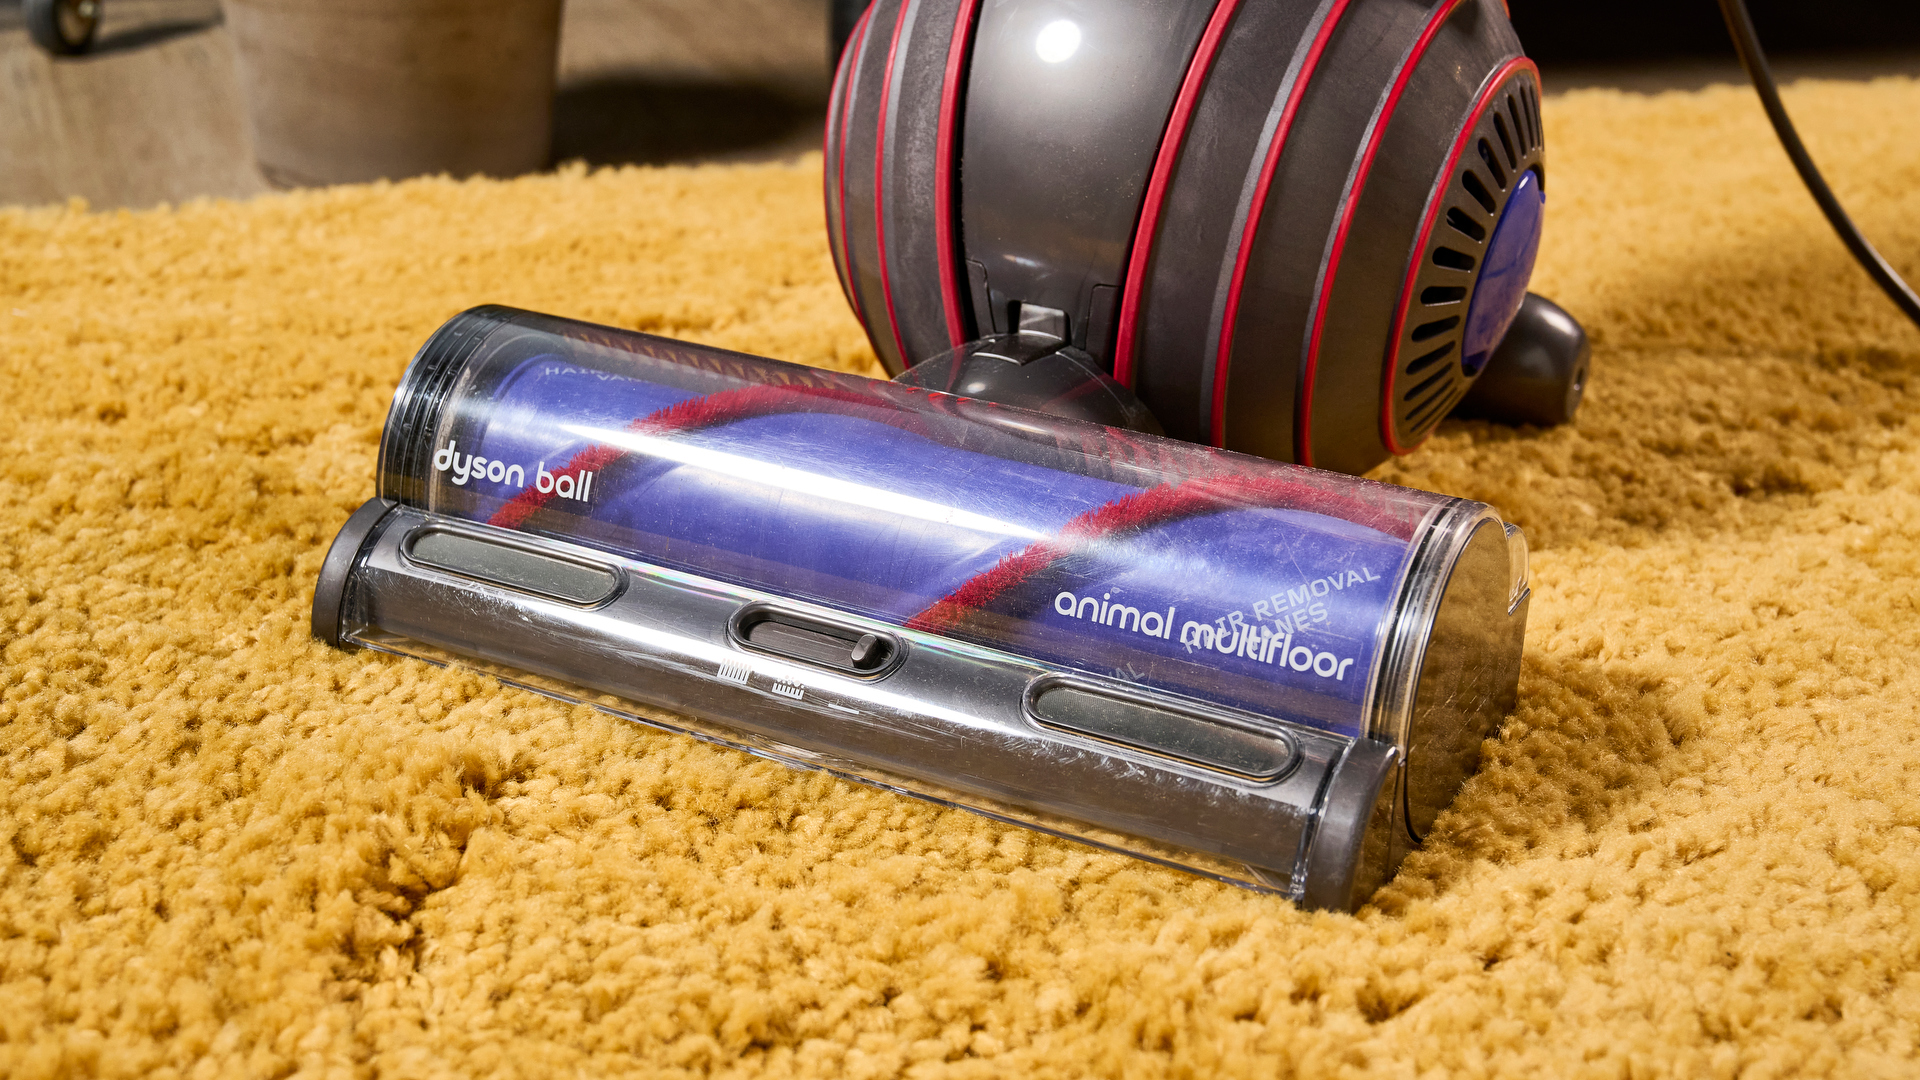 Close up of main floorhead on Dyson Ball Animal upright vacuum cleaner